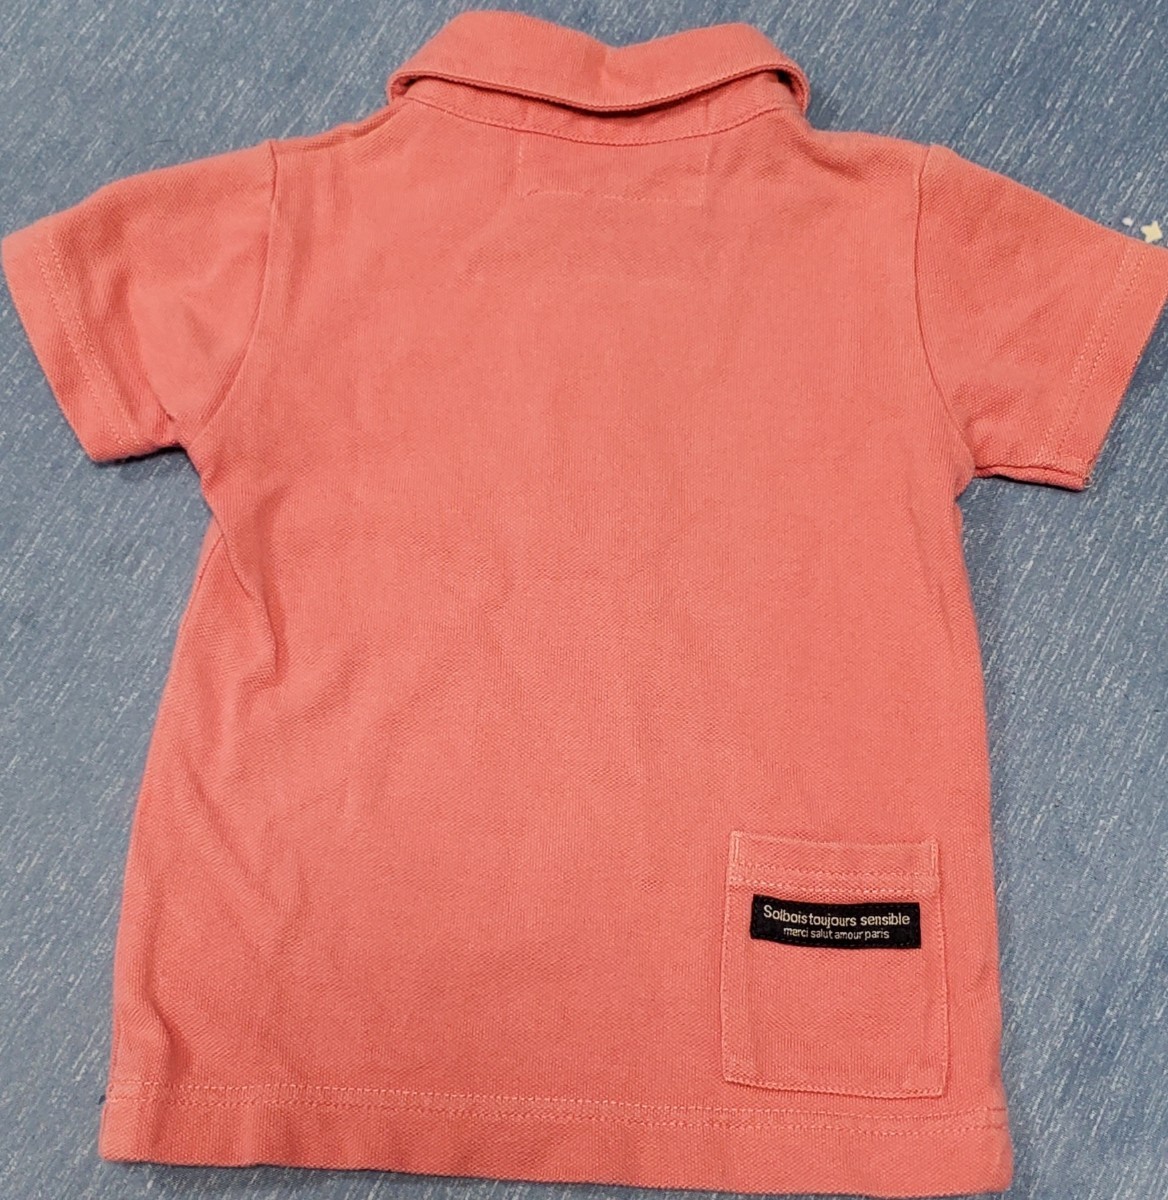 SOLBOIS  半袖 ポロシャツ綿100% ピンク  80cm 